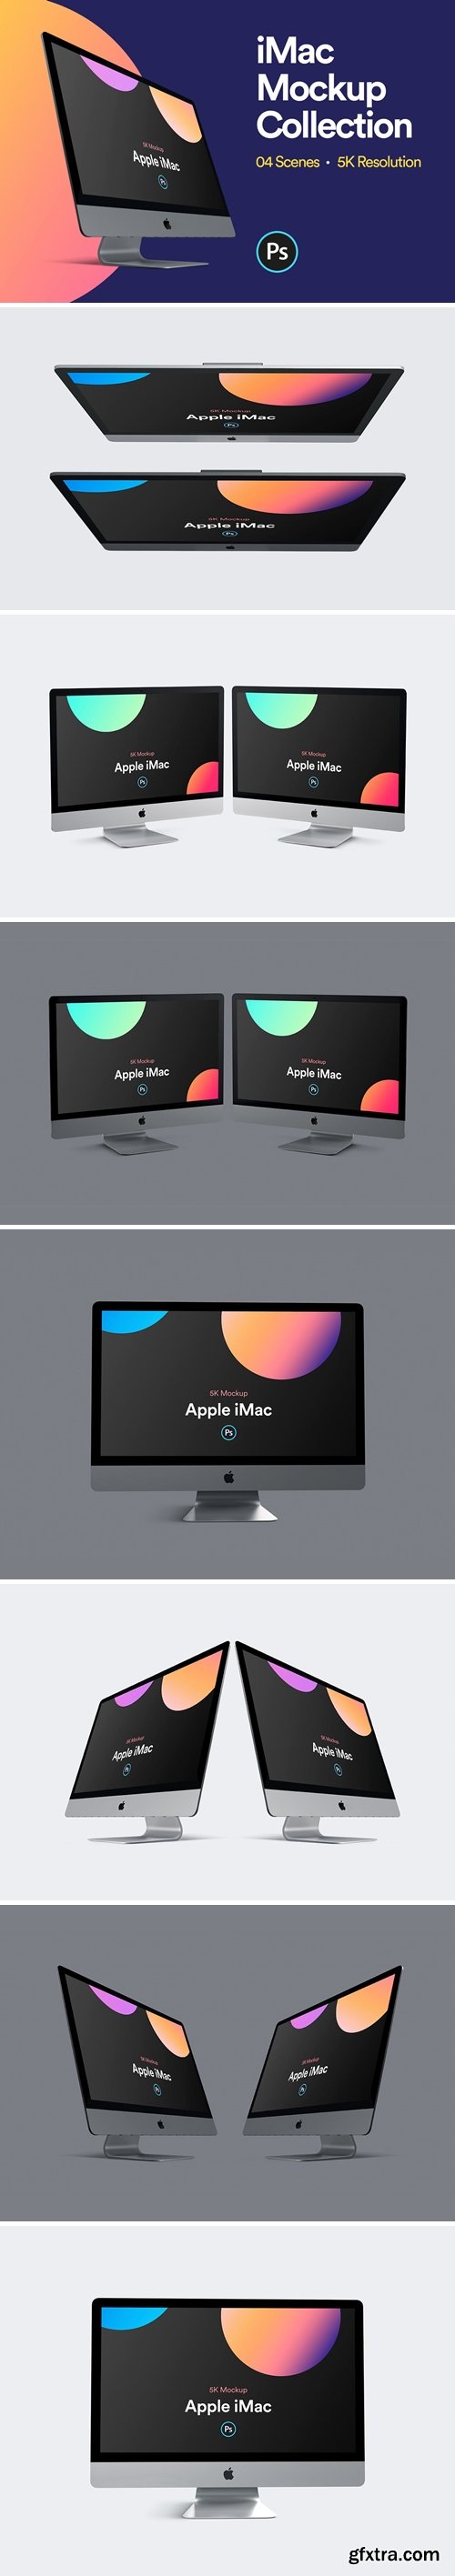 iMac Pro 2019 Mockup Collection